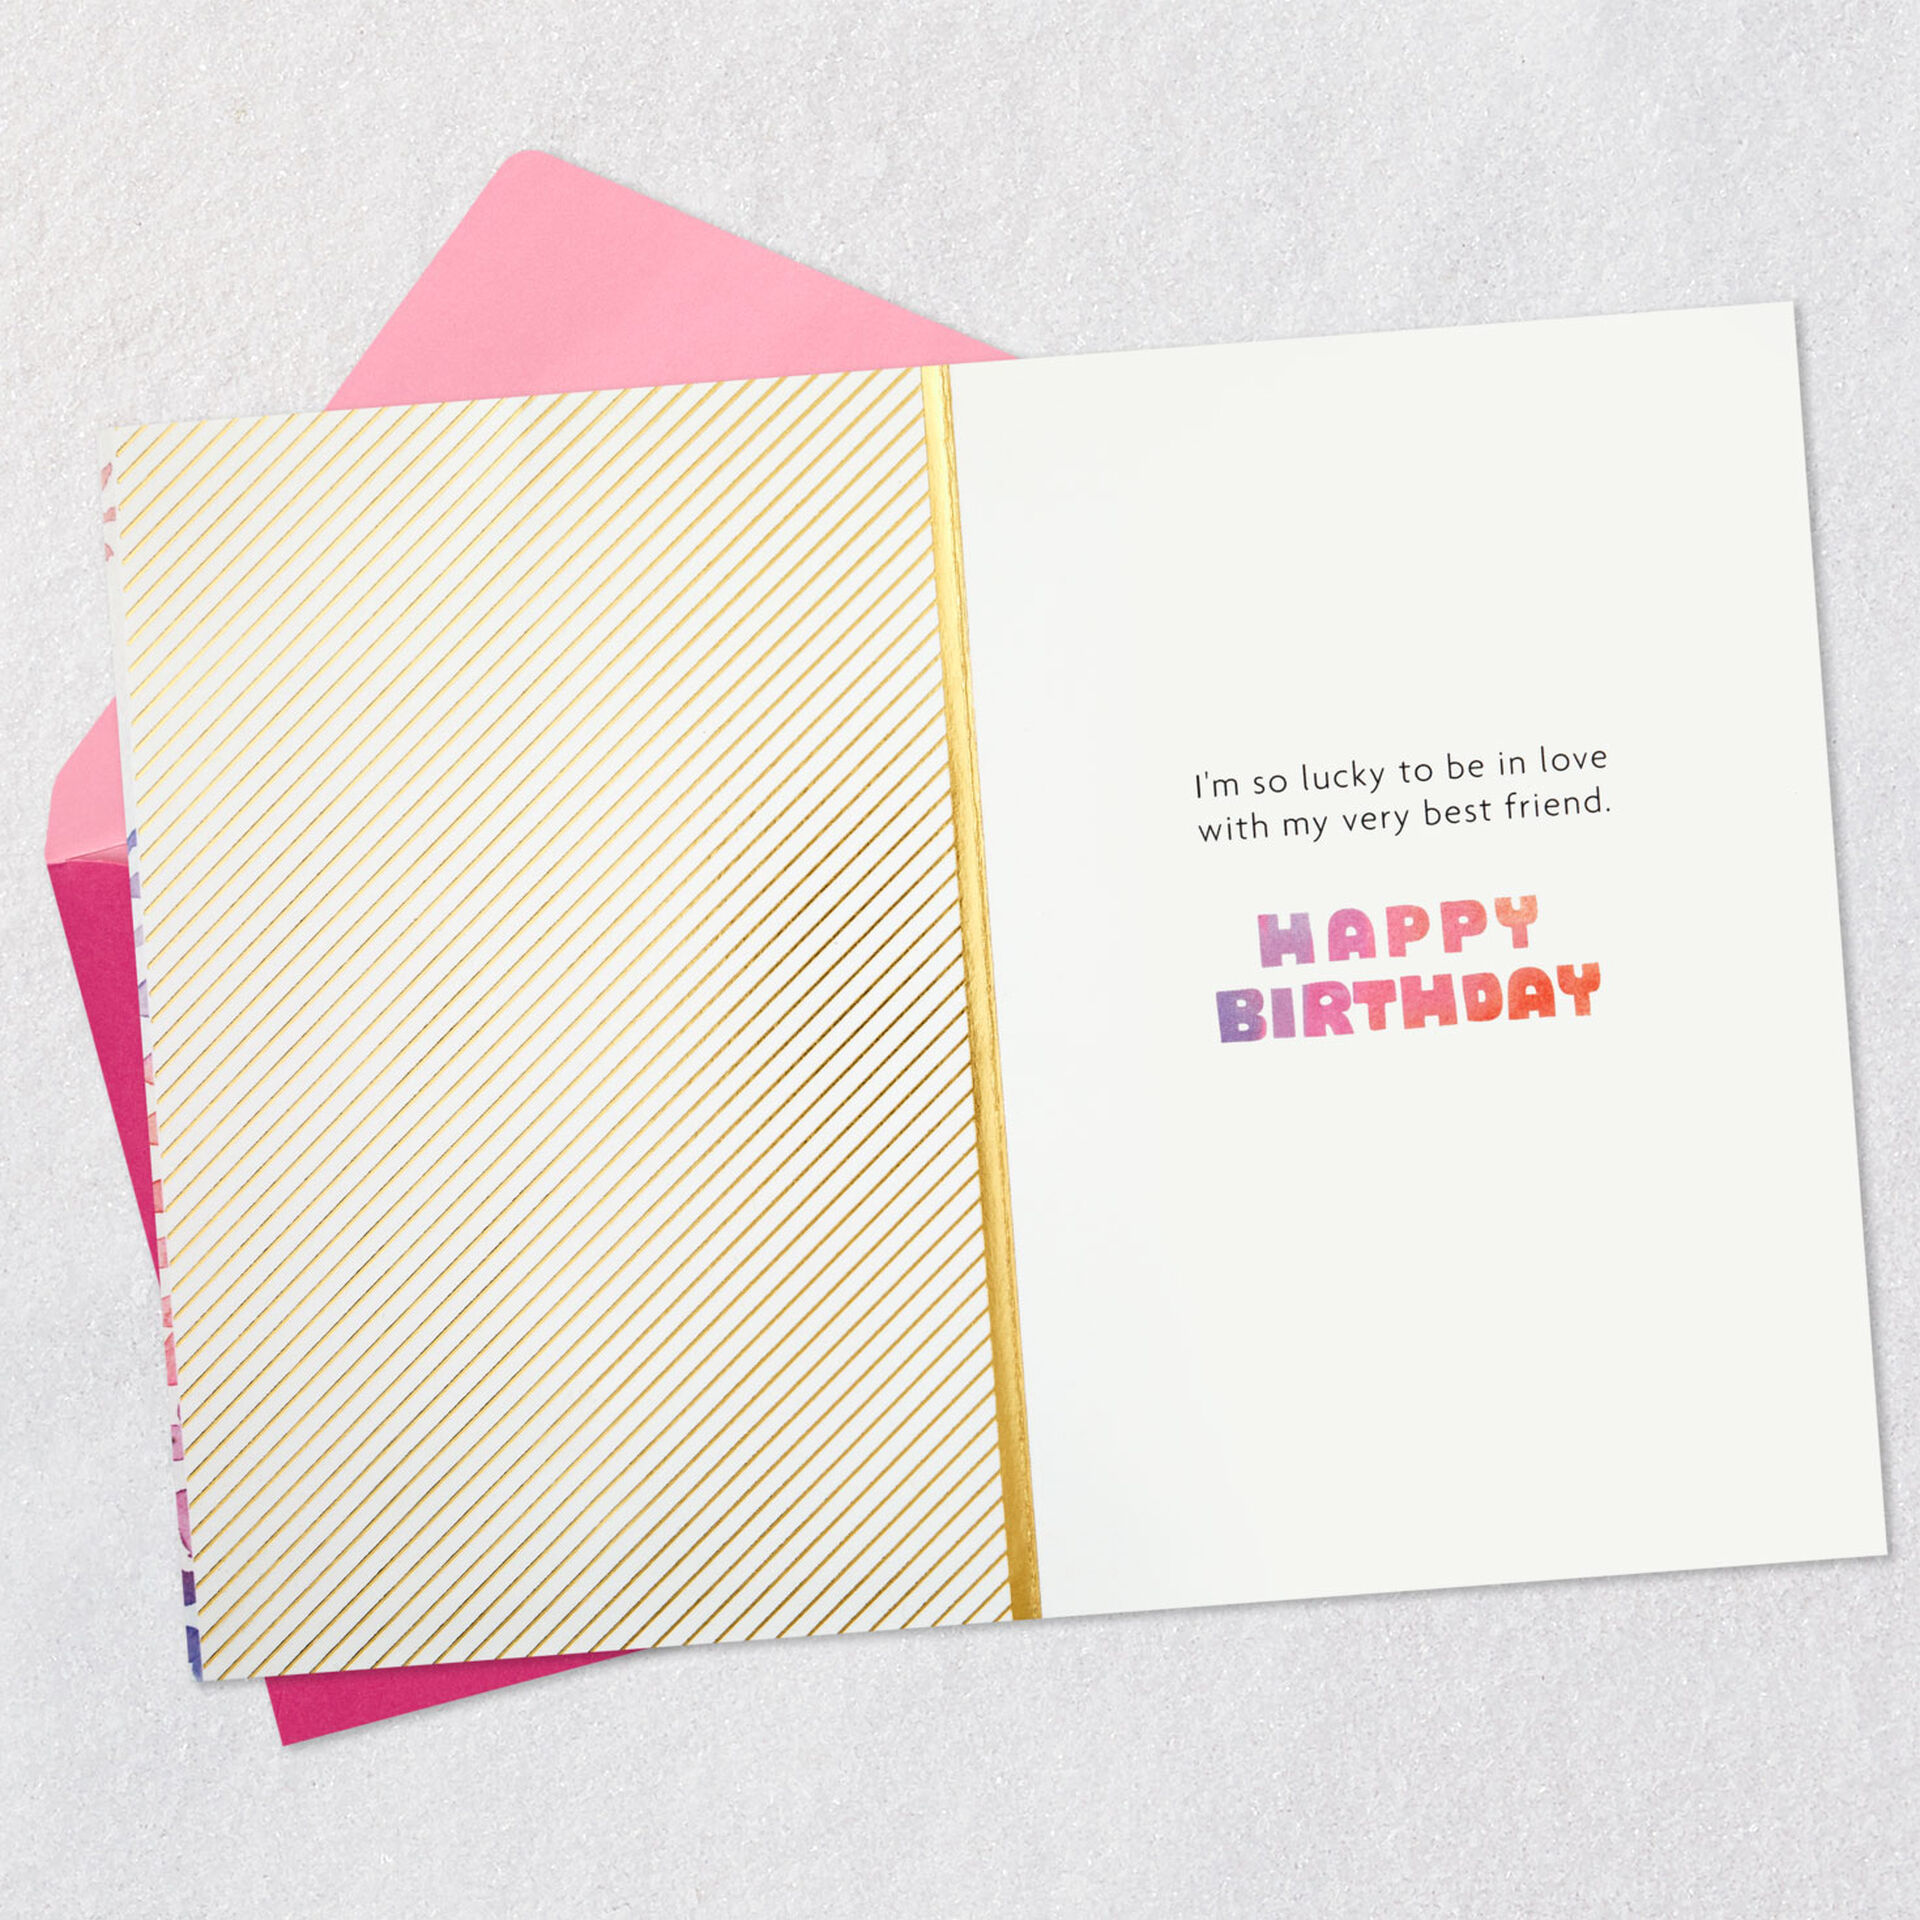 In Love With My Best Friend Birthday Card - Greeting Cards - Hallmark